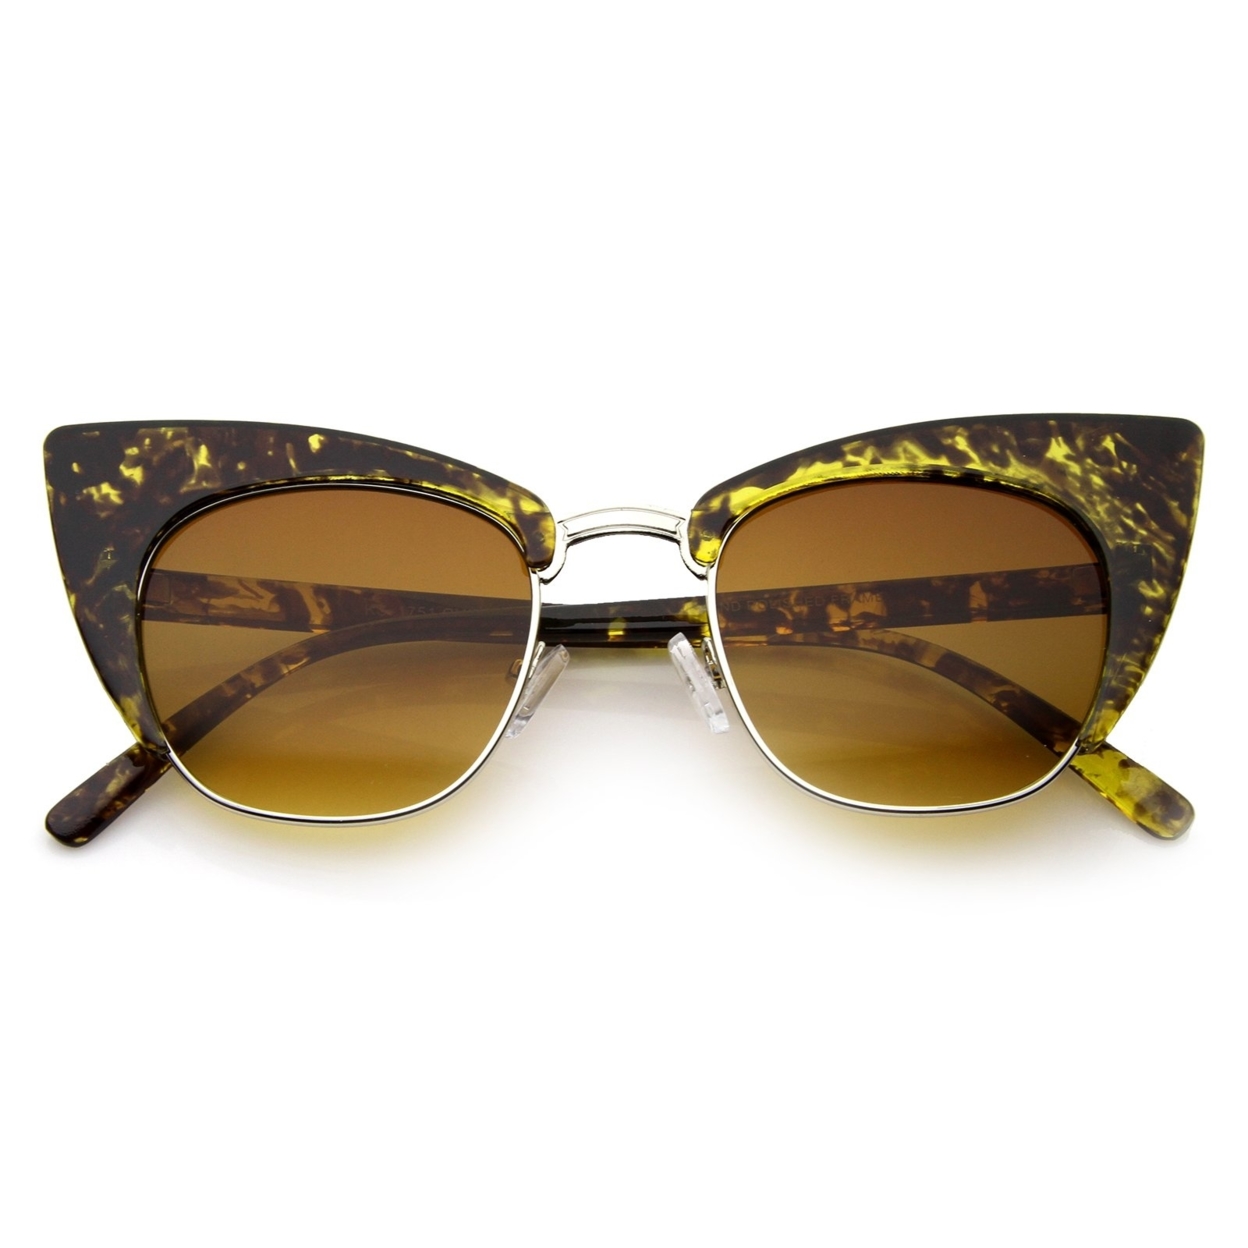 Women's High Fashion Half Frame Bold Square Cat Eye Sunglasses 50mm - Orange-Tortoise / Amber